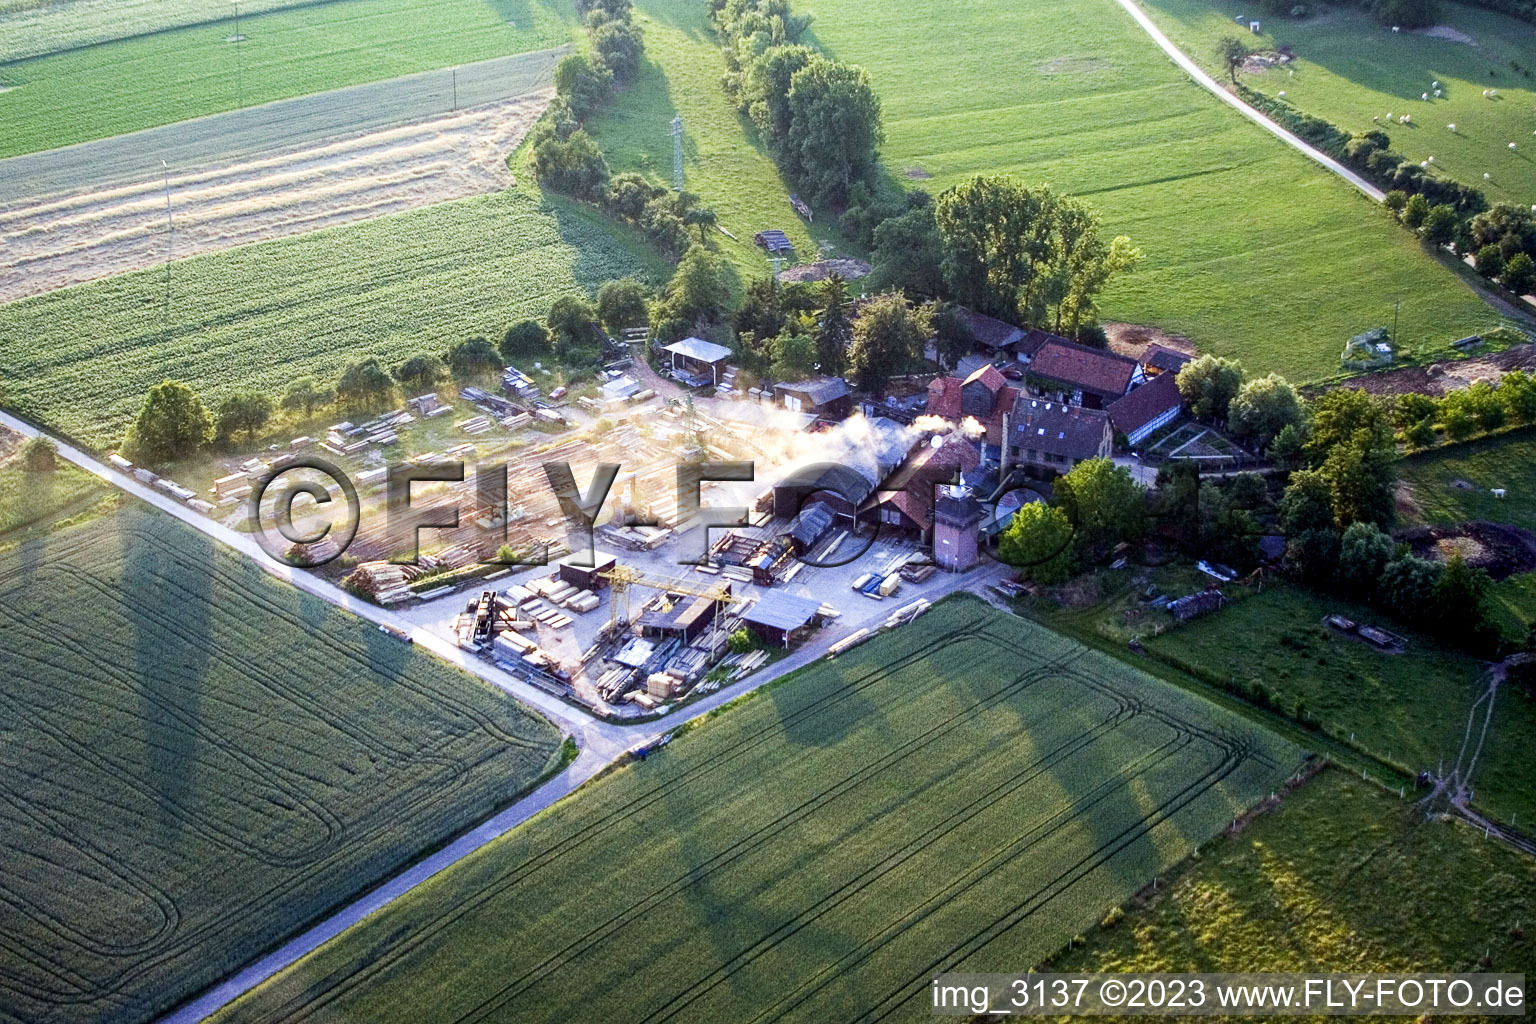 Drone image of Schaidter mill in the district Schaidt in Wörth am Rhein in the state Rhineland-Palatinate, Germany